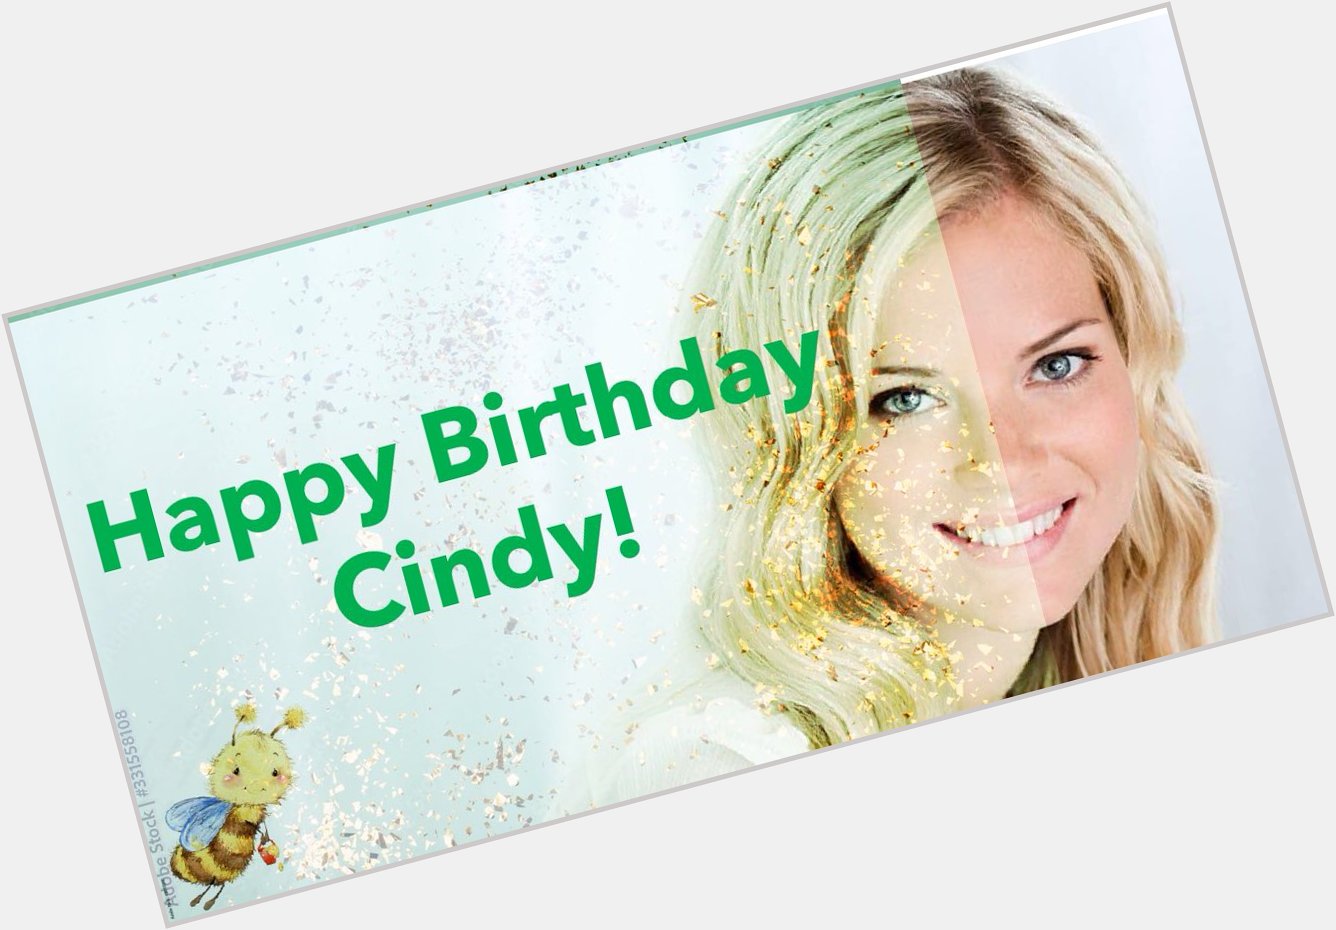   Happy Birthday Cindy, enjoy your day!  